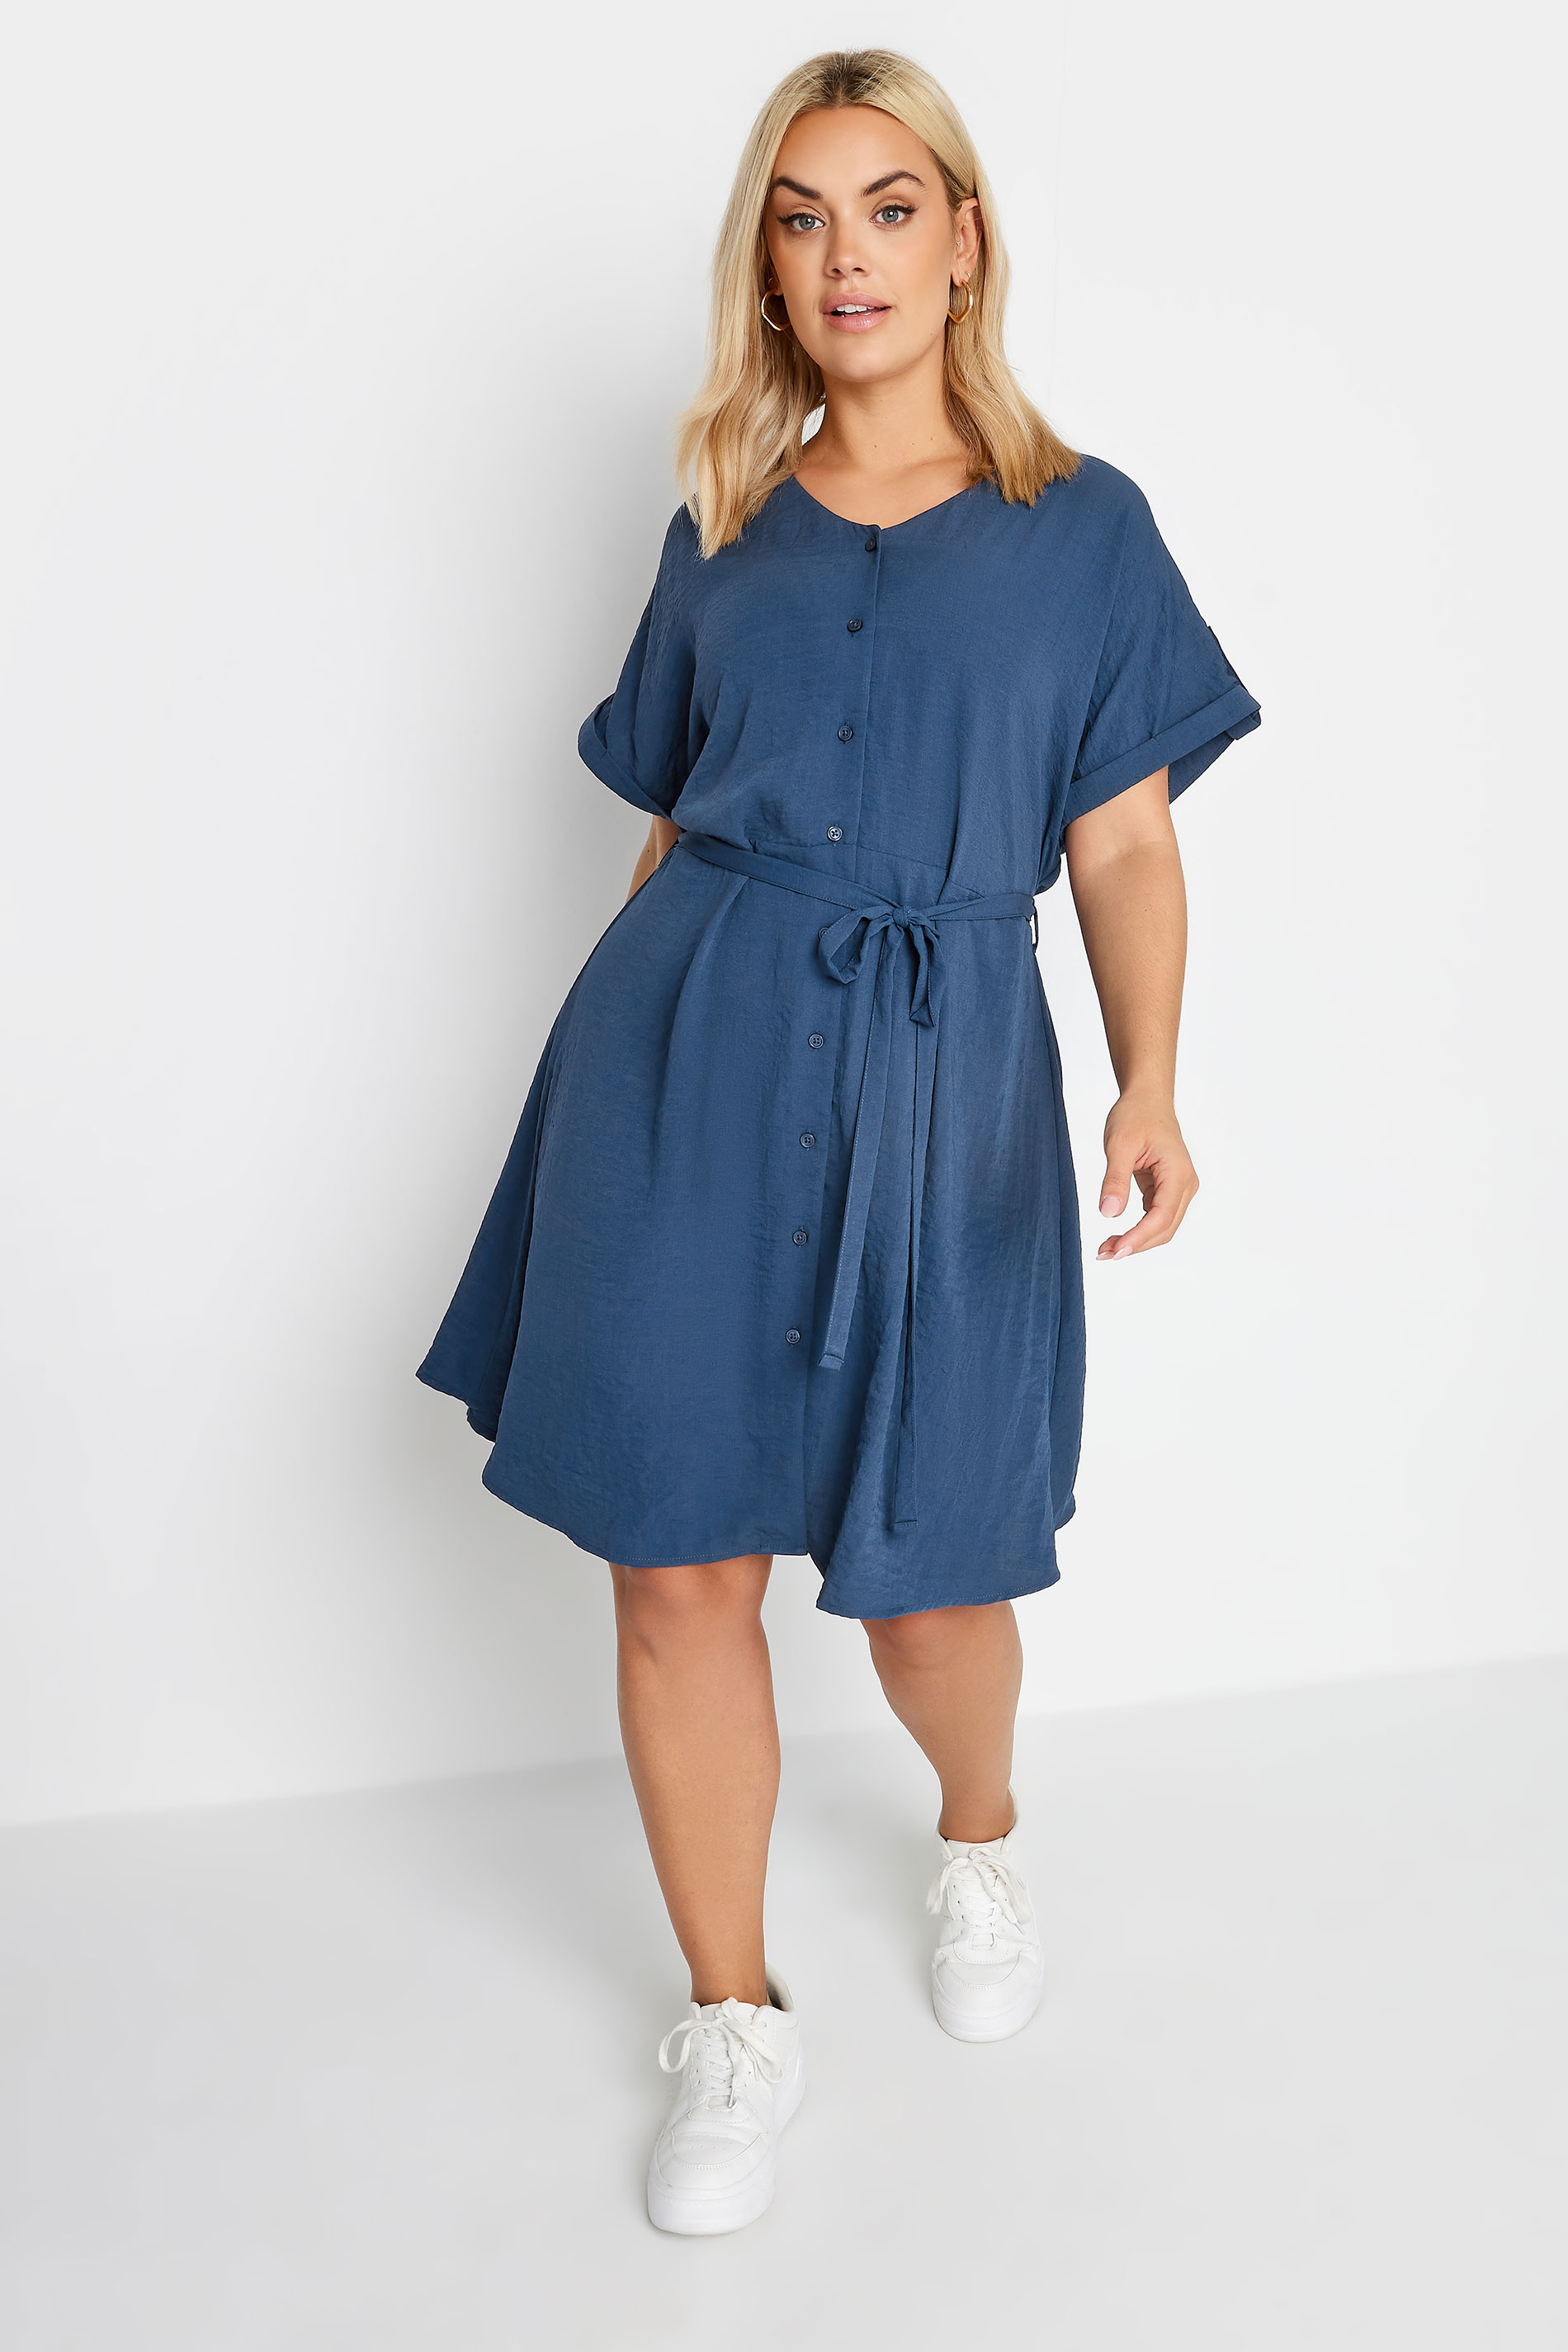 YOURS Plus Size Navy Blue Utility Shirt Mini Dress | Yours Clothing  1